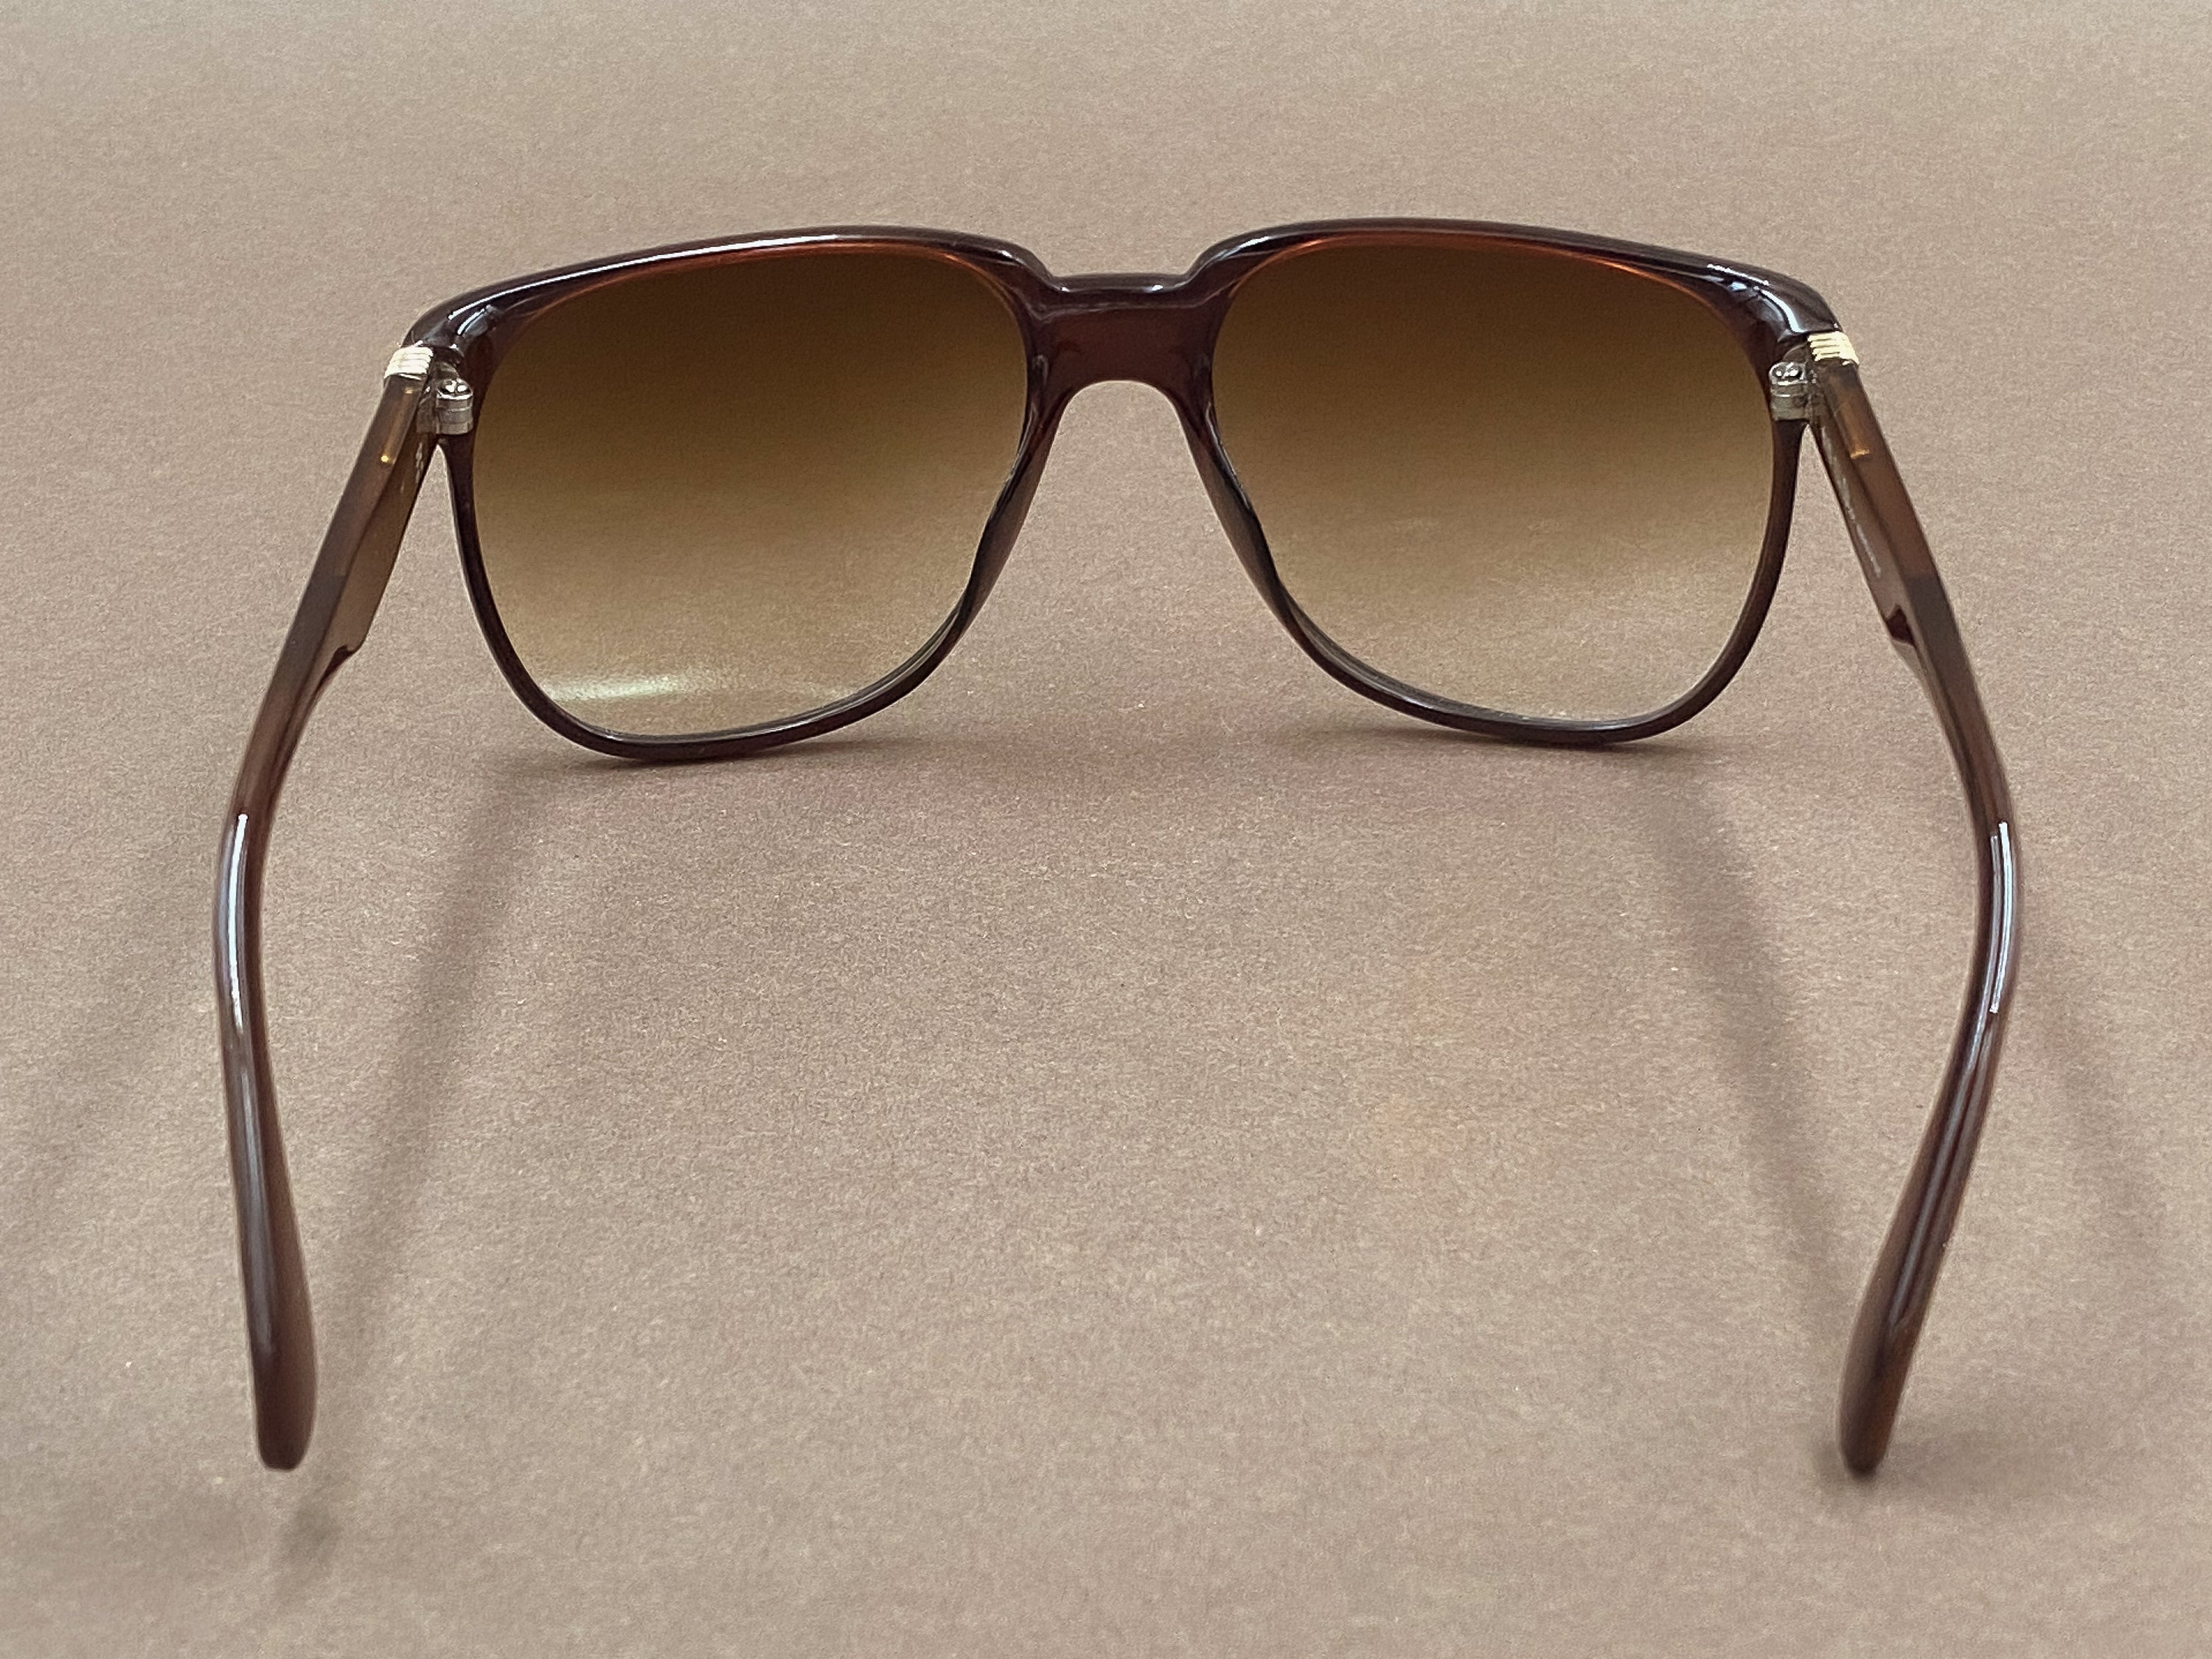 Christian Dior 2317 Monsieur sunglasses